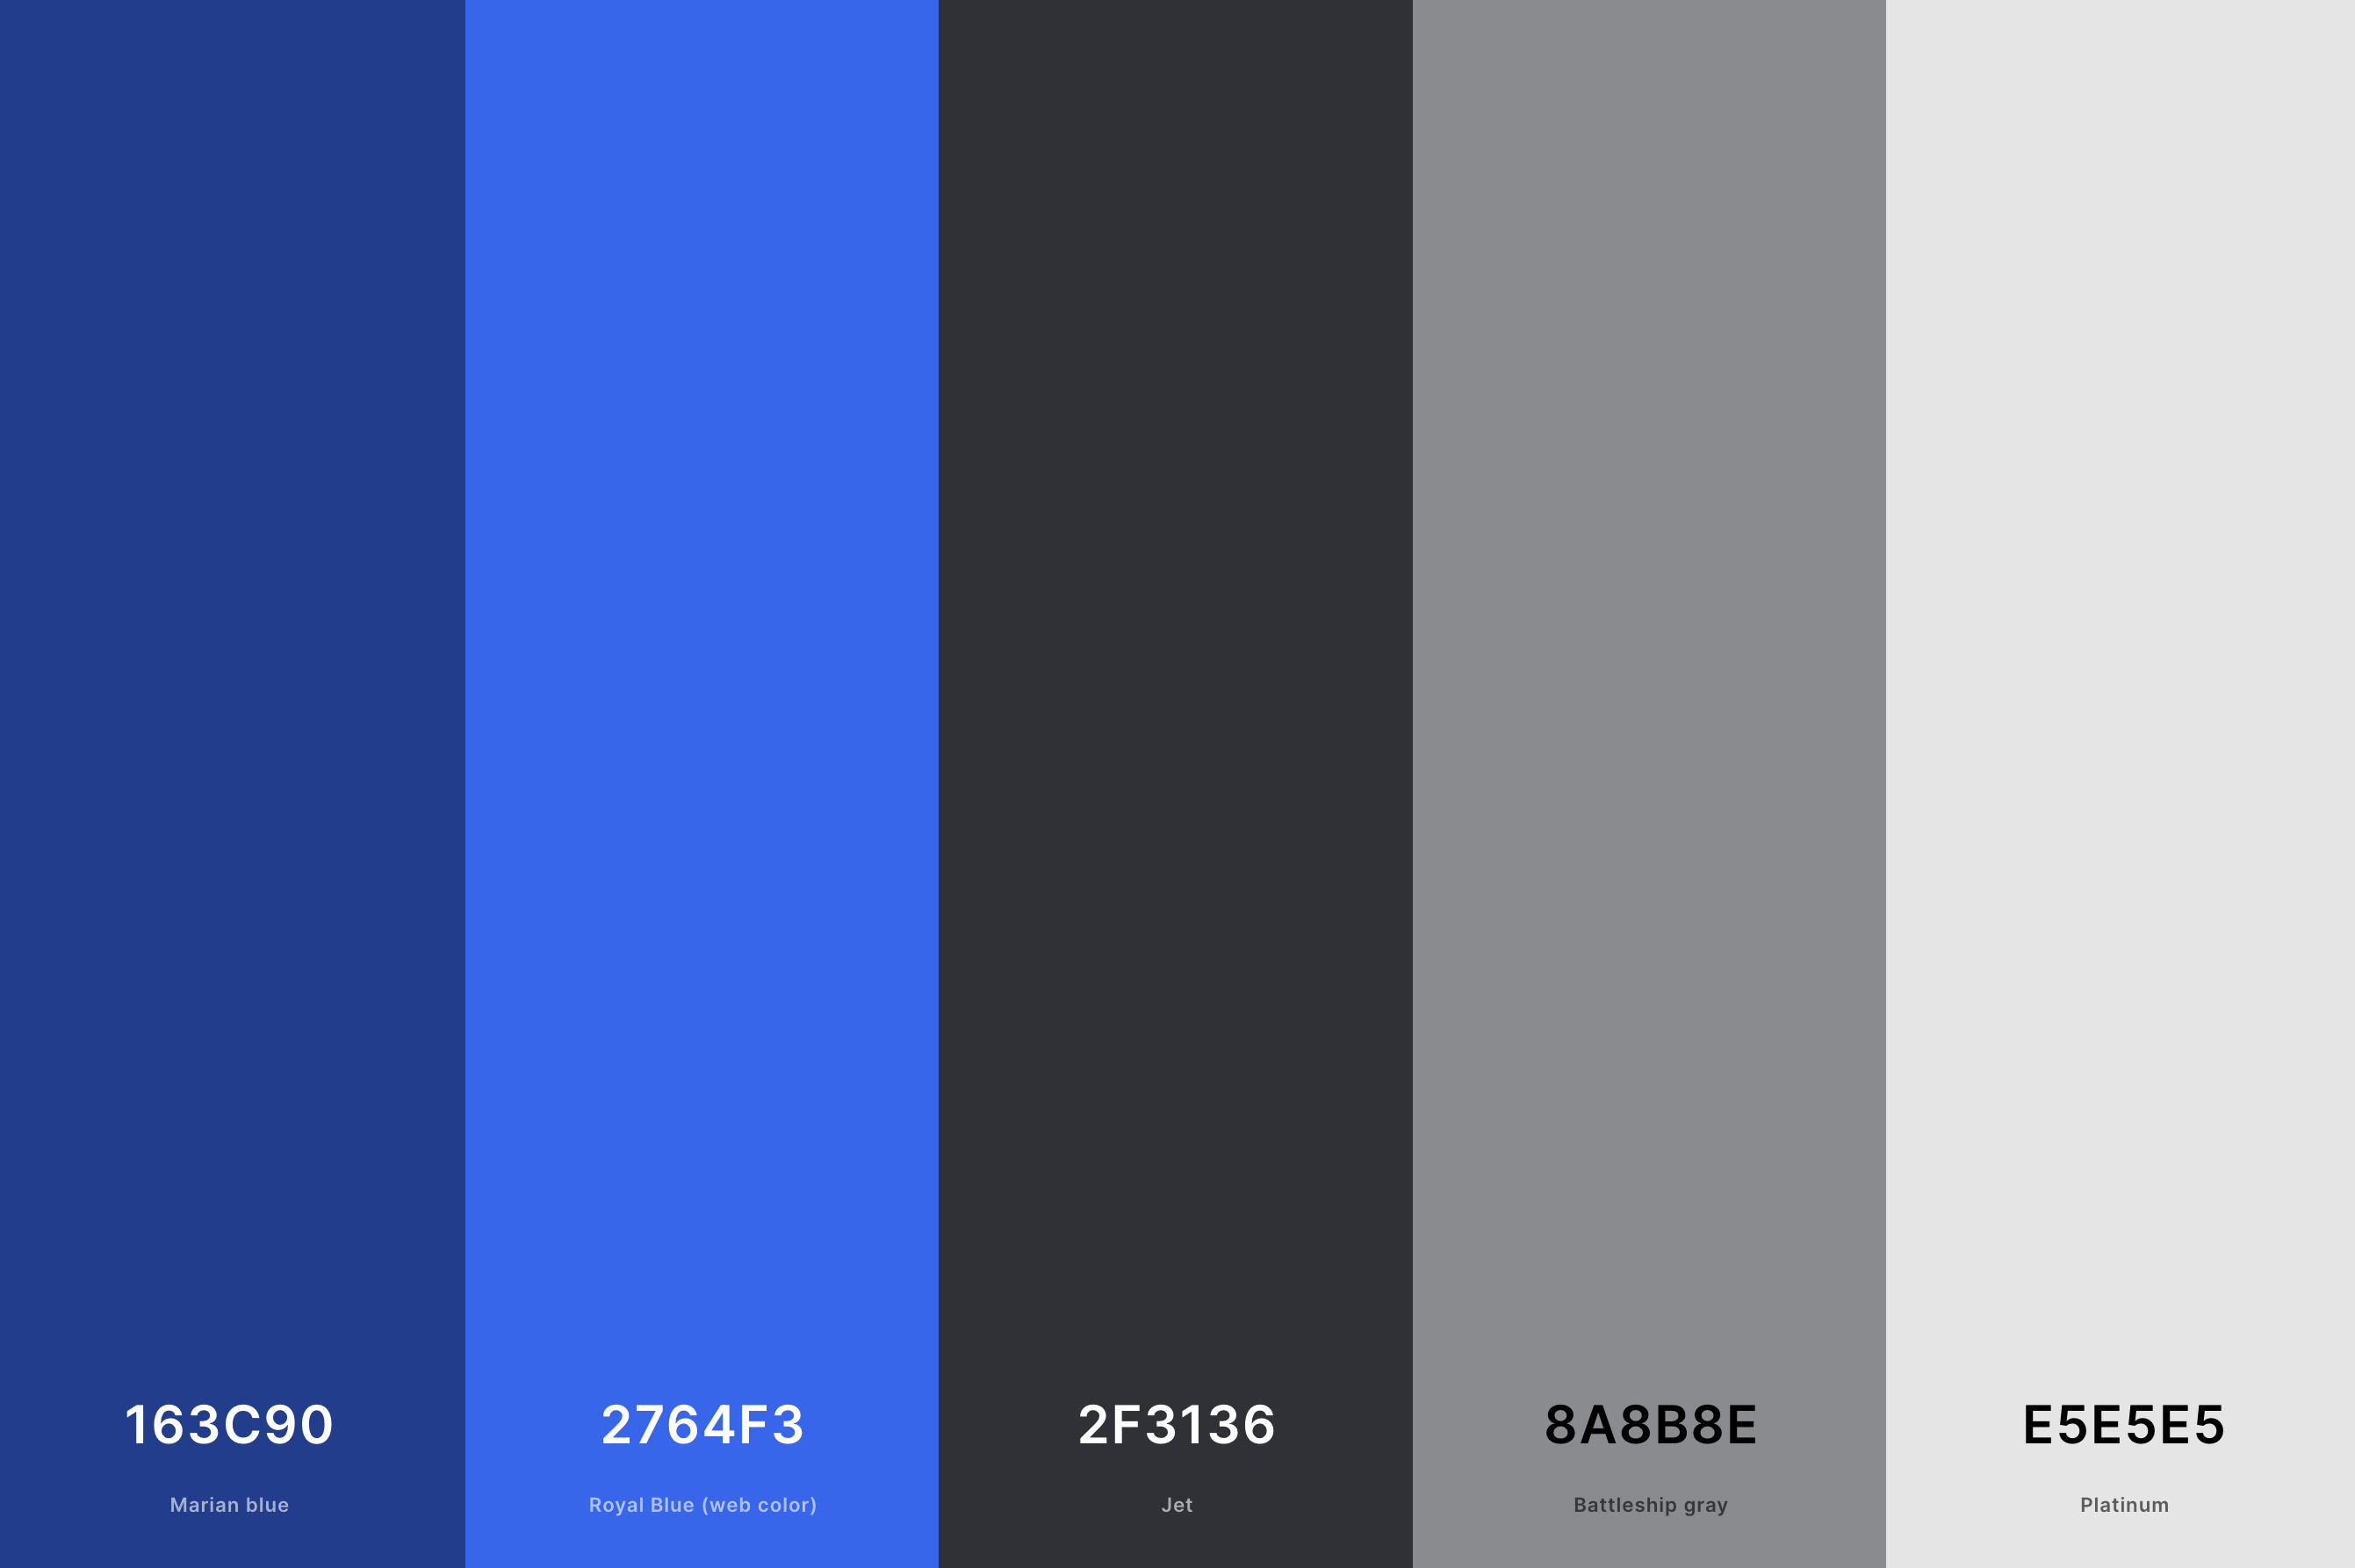 1. Blue And Gray Color Palette Color Palette with Marian Blue (Hex #163C90) + Royal Blue (Web Color) (Hex #2764F3) + Jet (Hex #2F3136) + Battleship Gray (Hex #8A8B8E) + Platinum (Hex #E5E5E5) Color Palette with Hex Codes